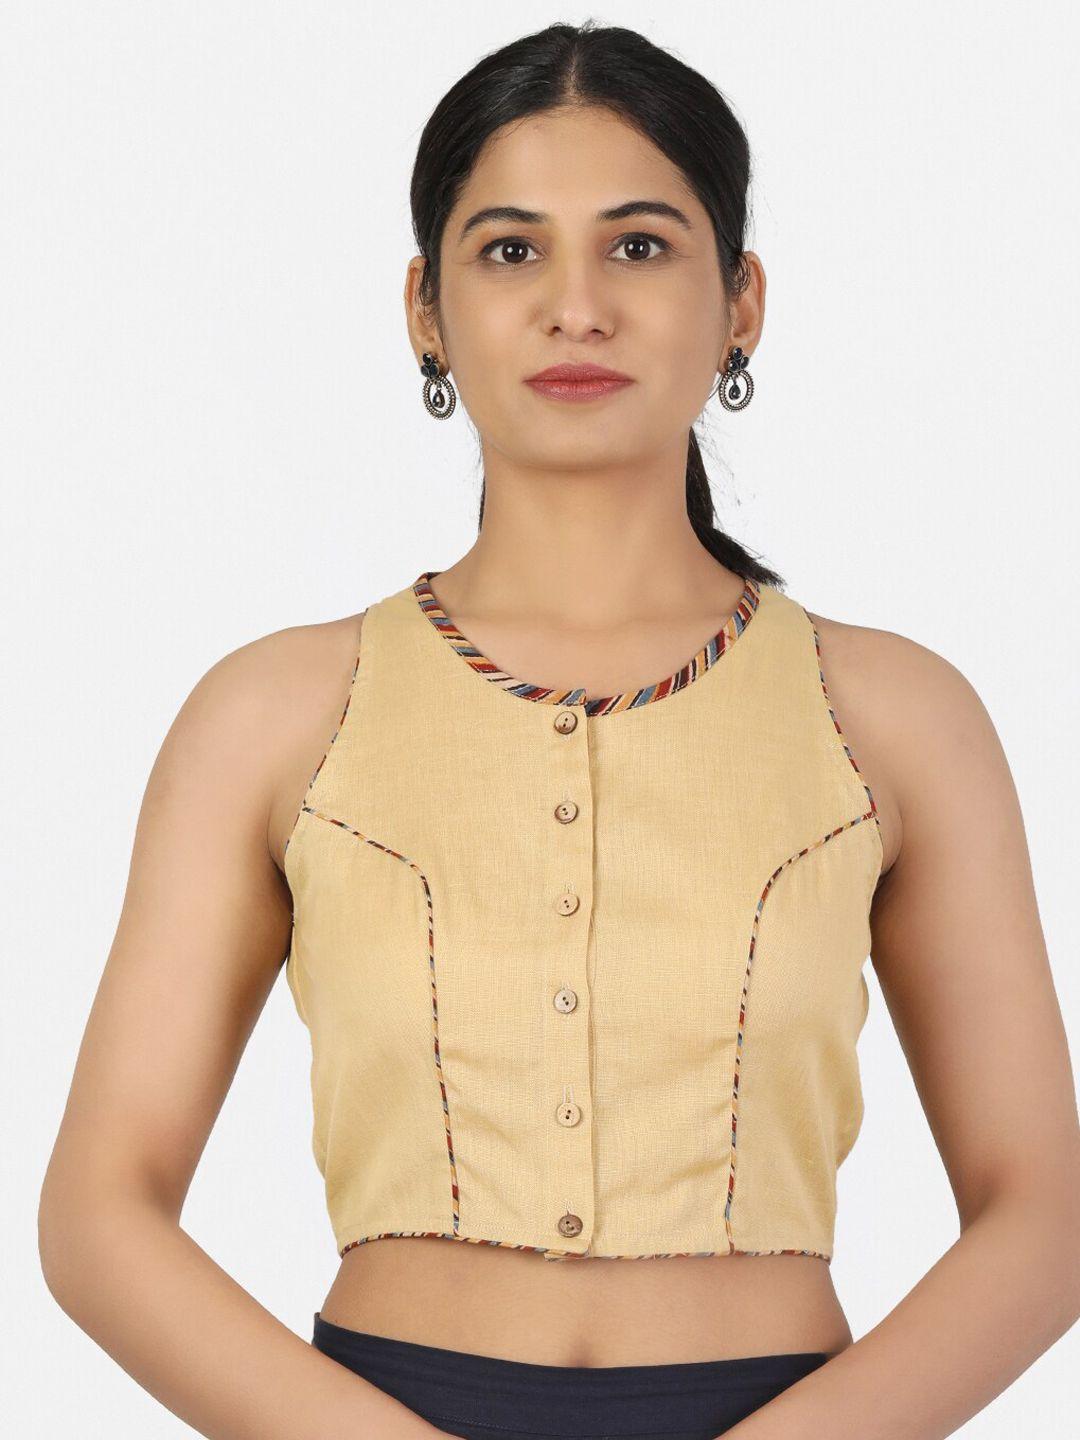 llajja-women-beige-solid-cotton-non-padded-saree-blouse